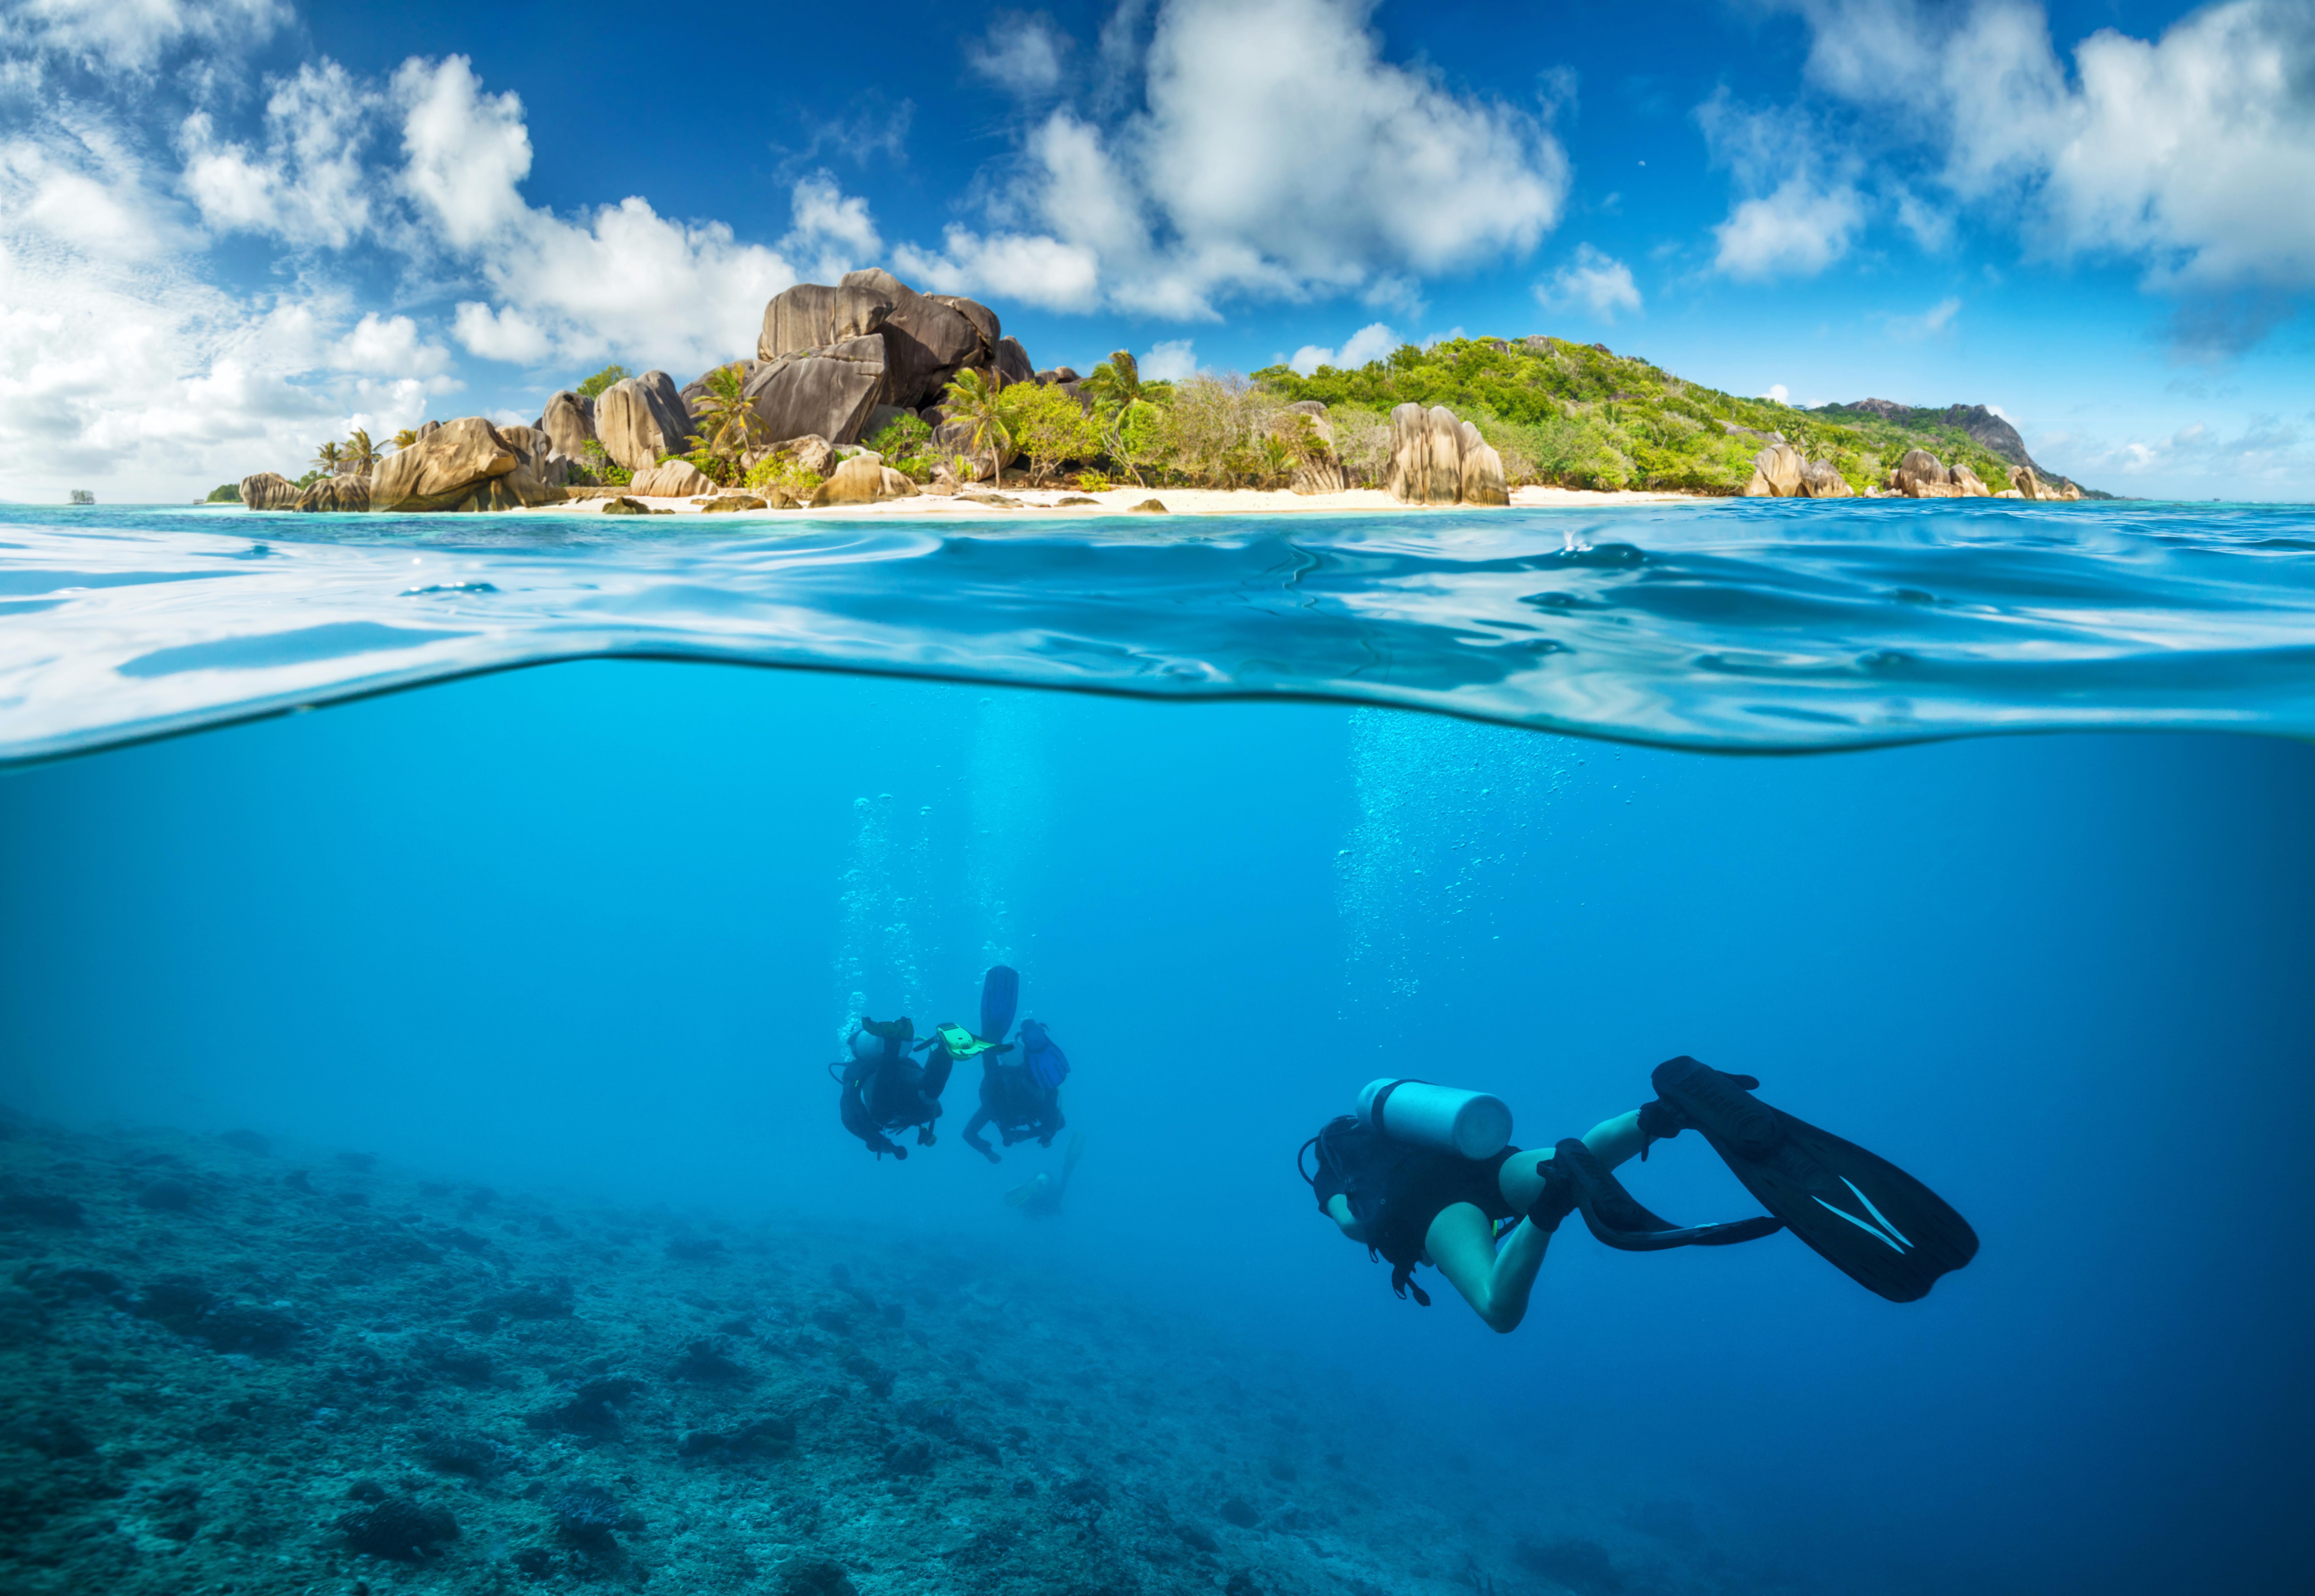 General 9000x6205 scuba underwater coral wetsuit diving suits Pacific Ocean summer split view